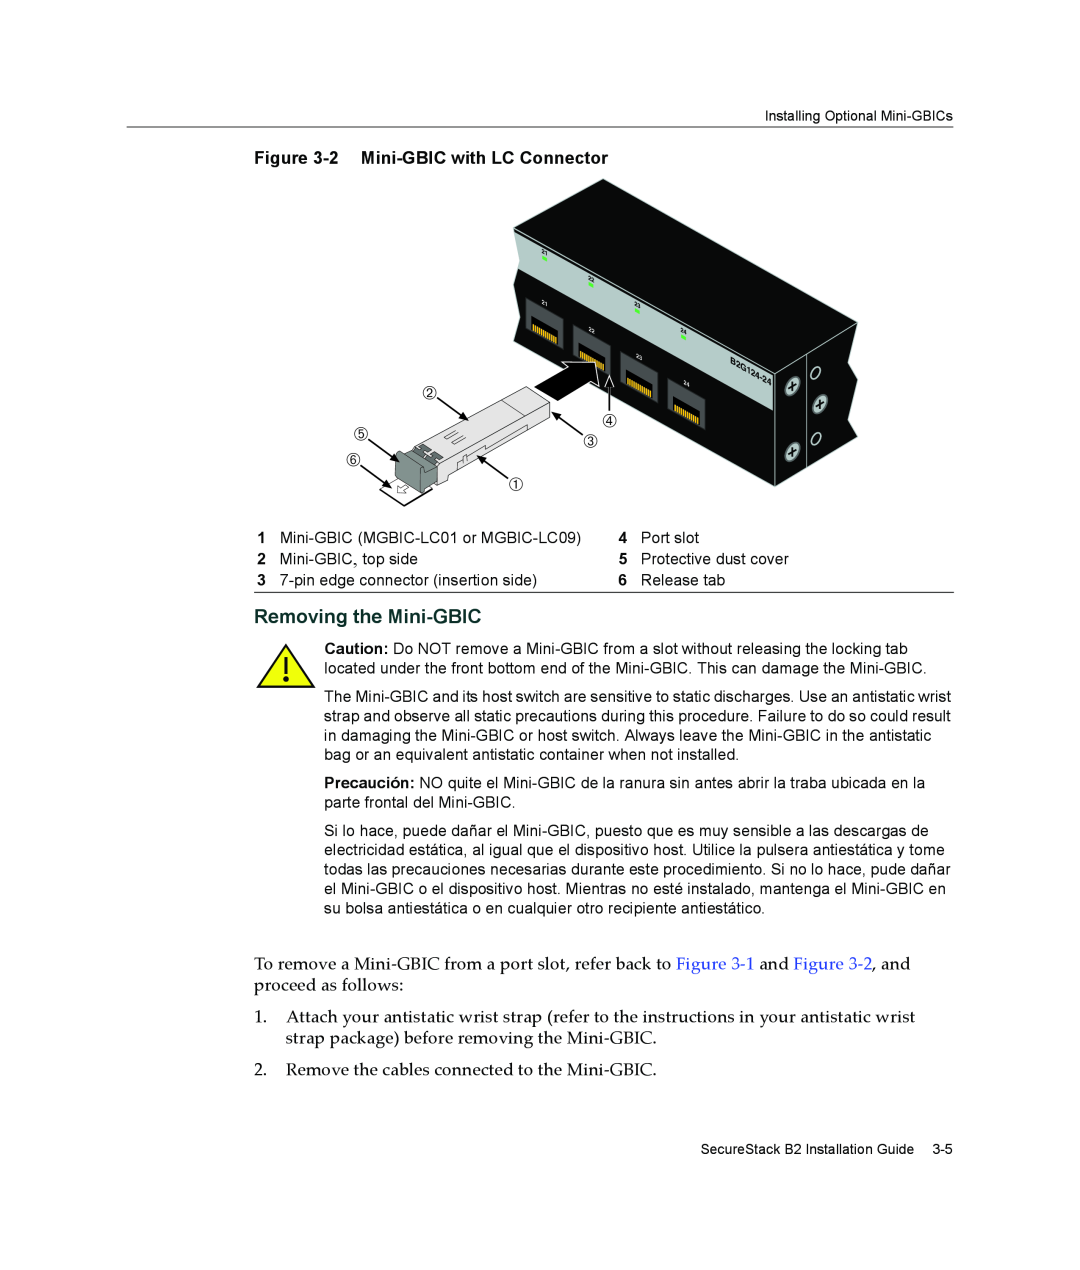 Enterasys Networks B2G124-24 manual Removing the Mini-GBIC 